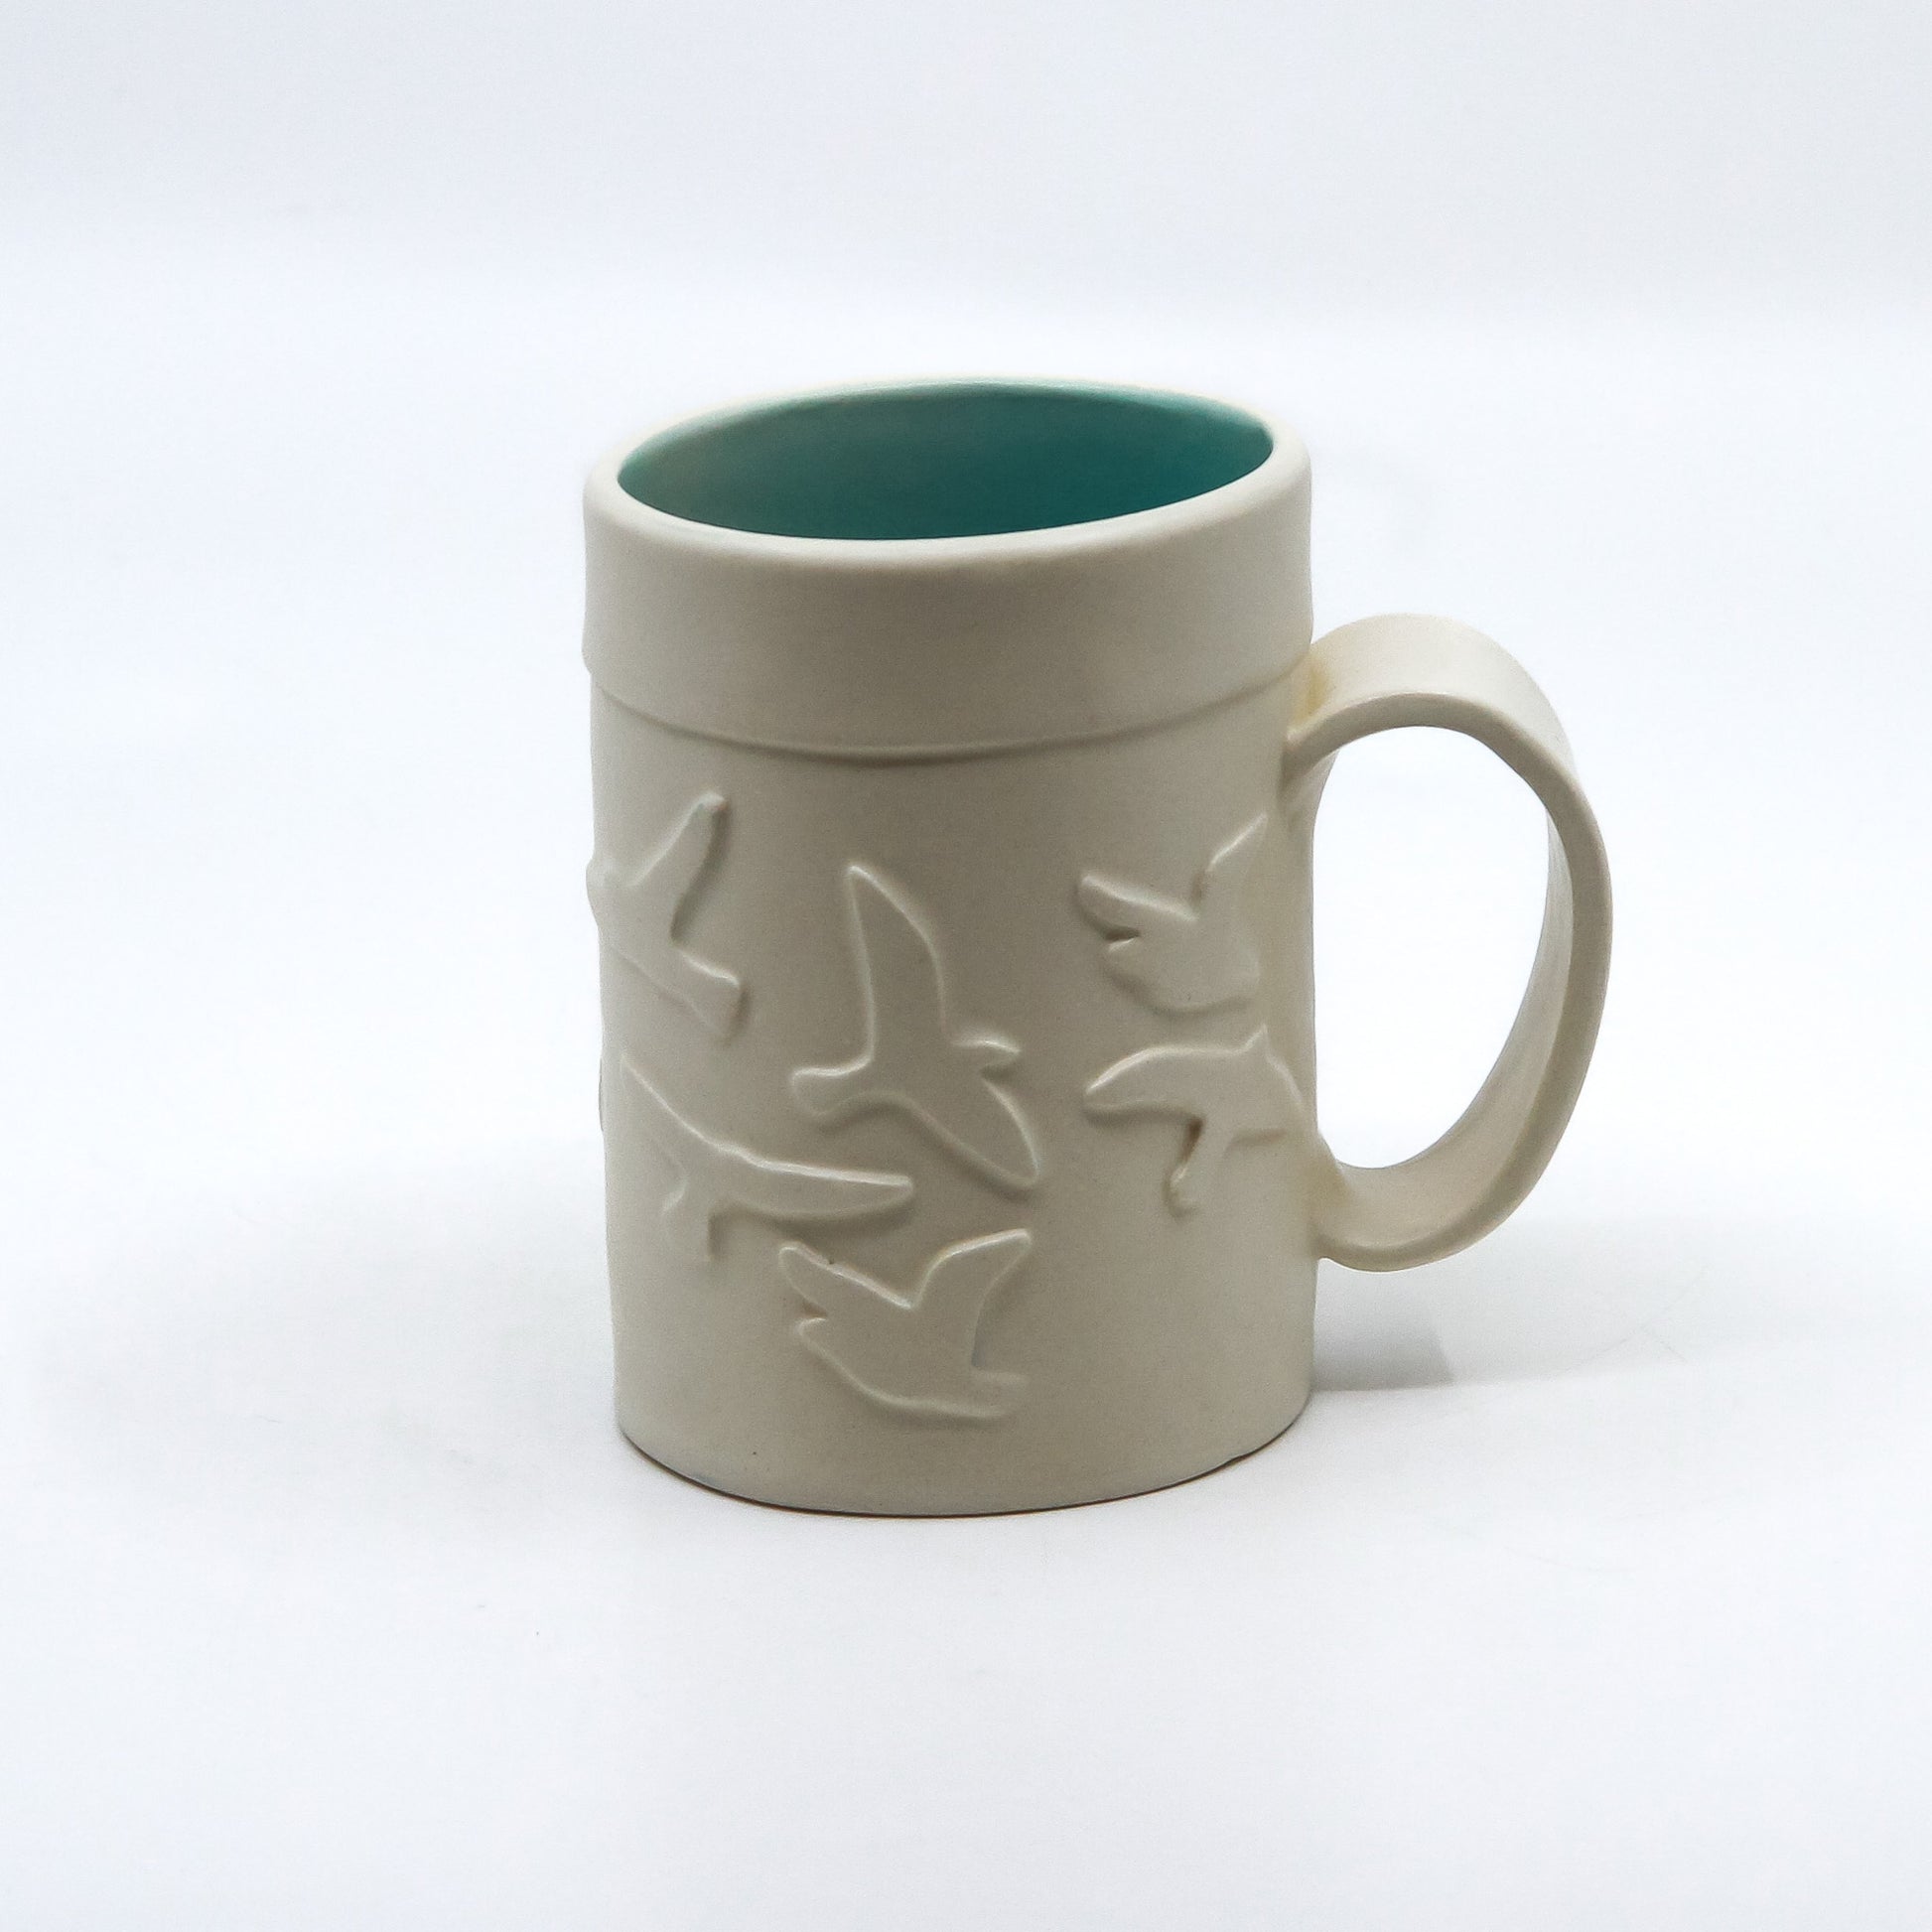 White mug with birds and turquoise inside